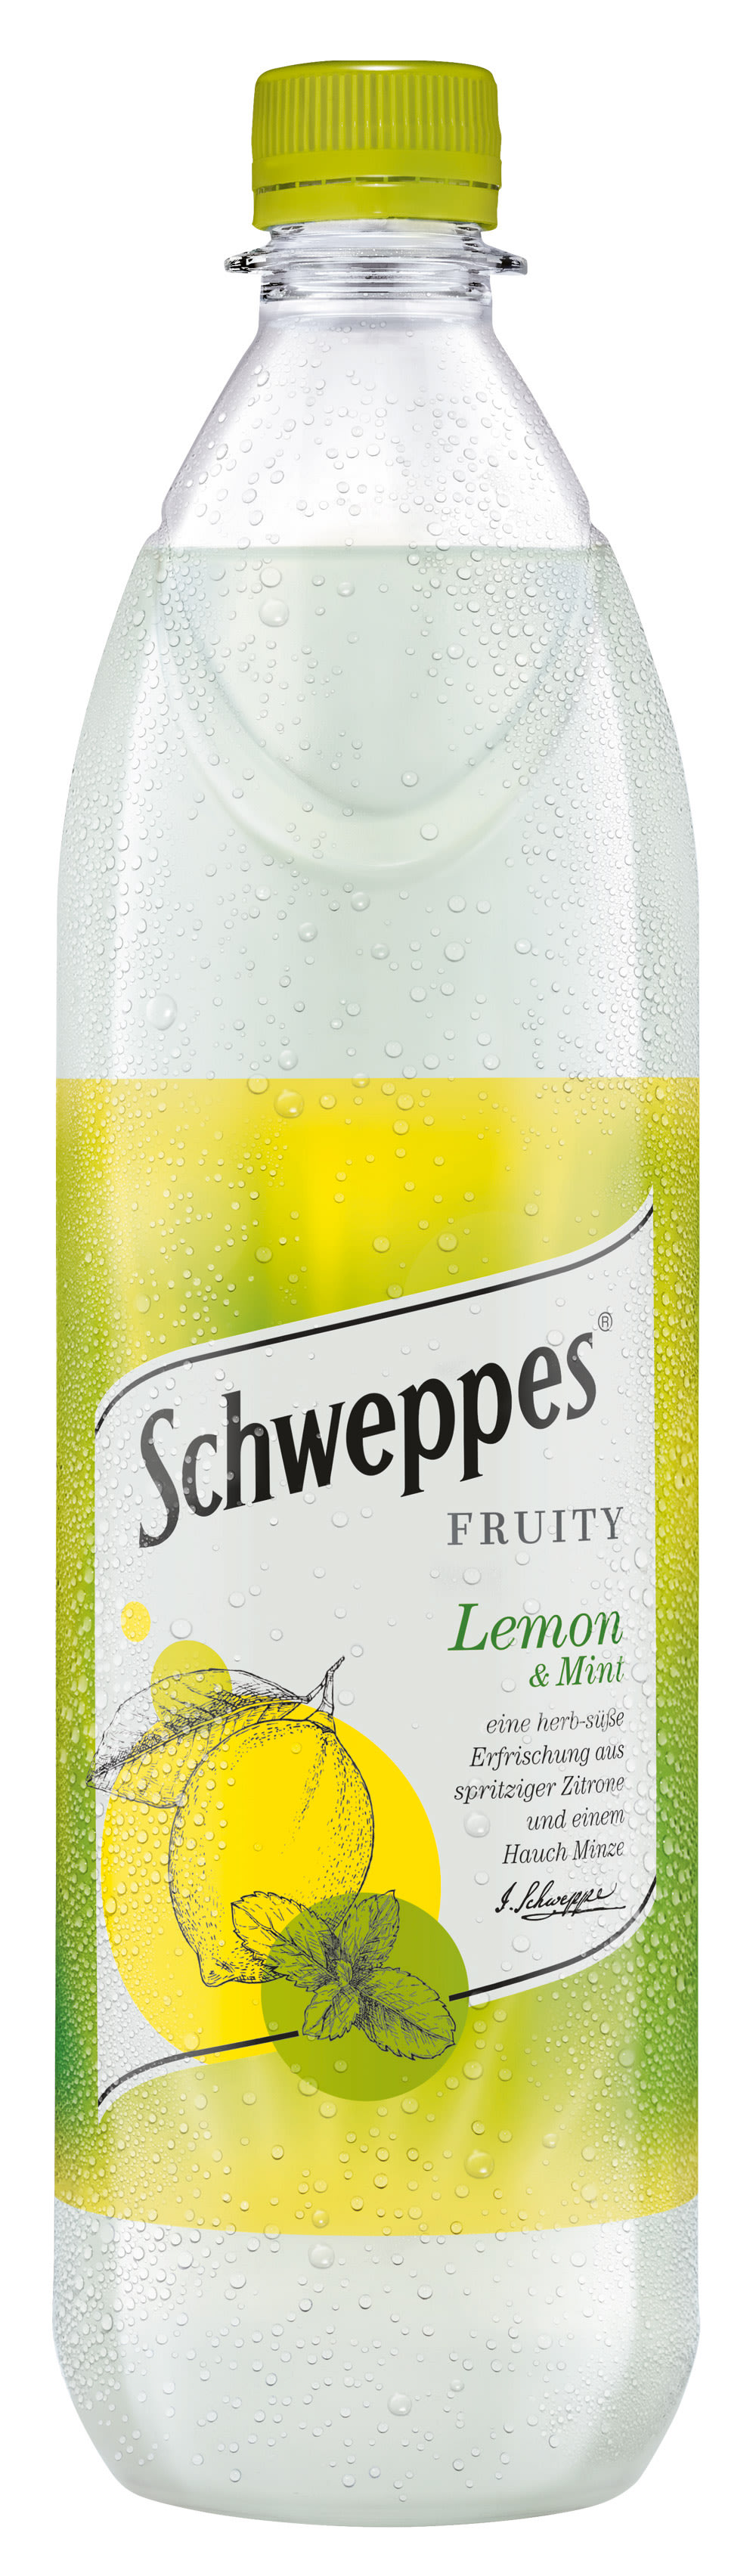 Schweppes Fruity Lemon & Mint Kasten 6 x 1 l PET Mehrweg